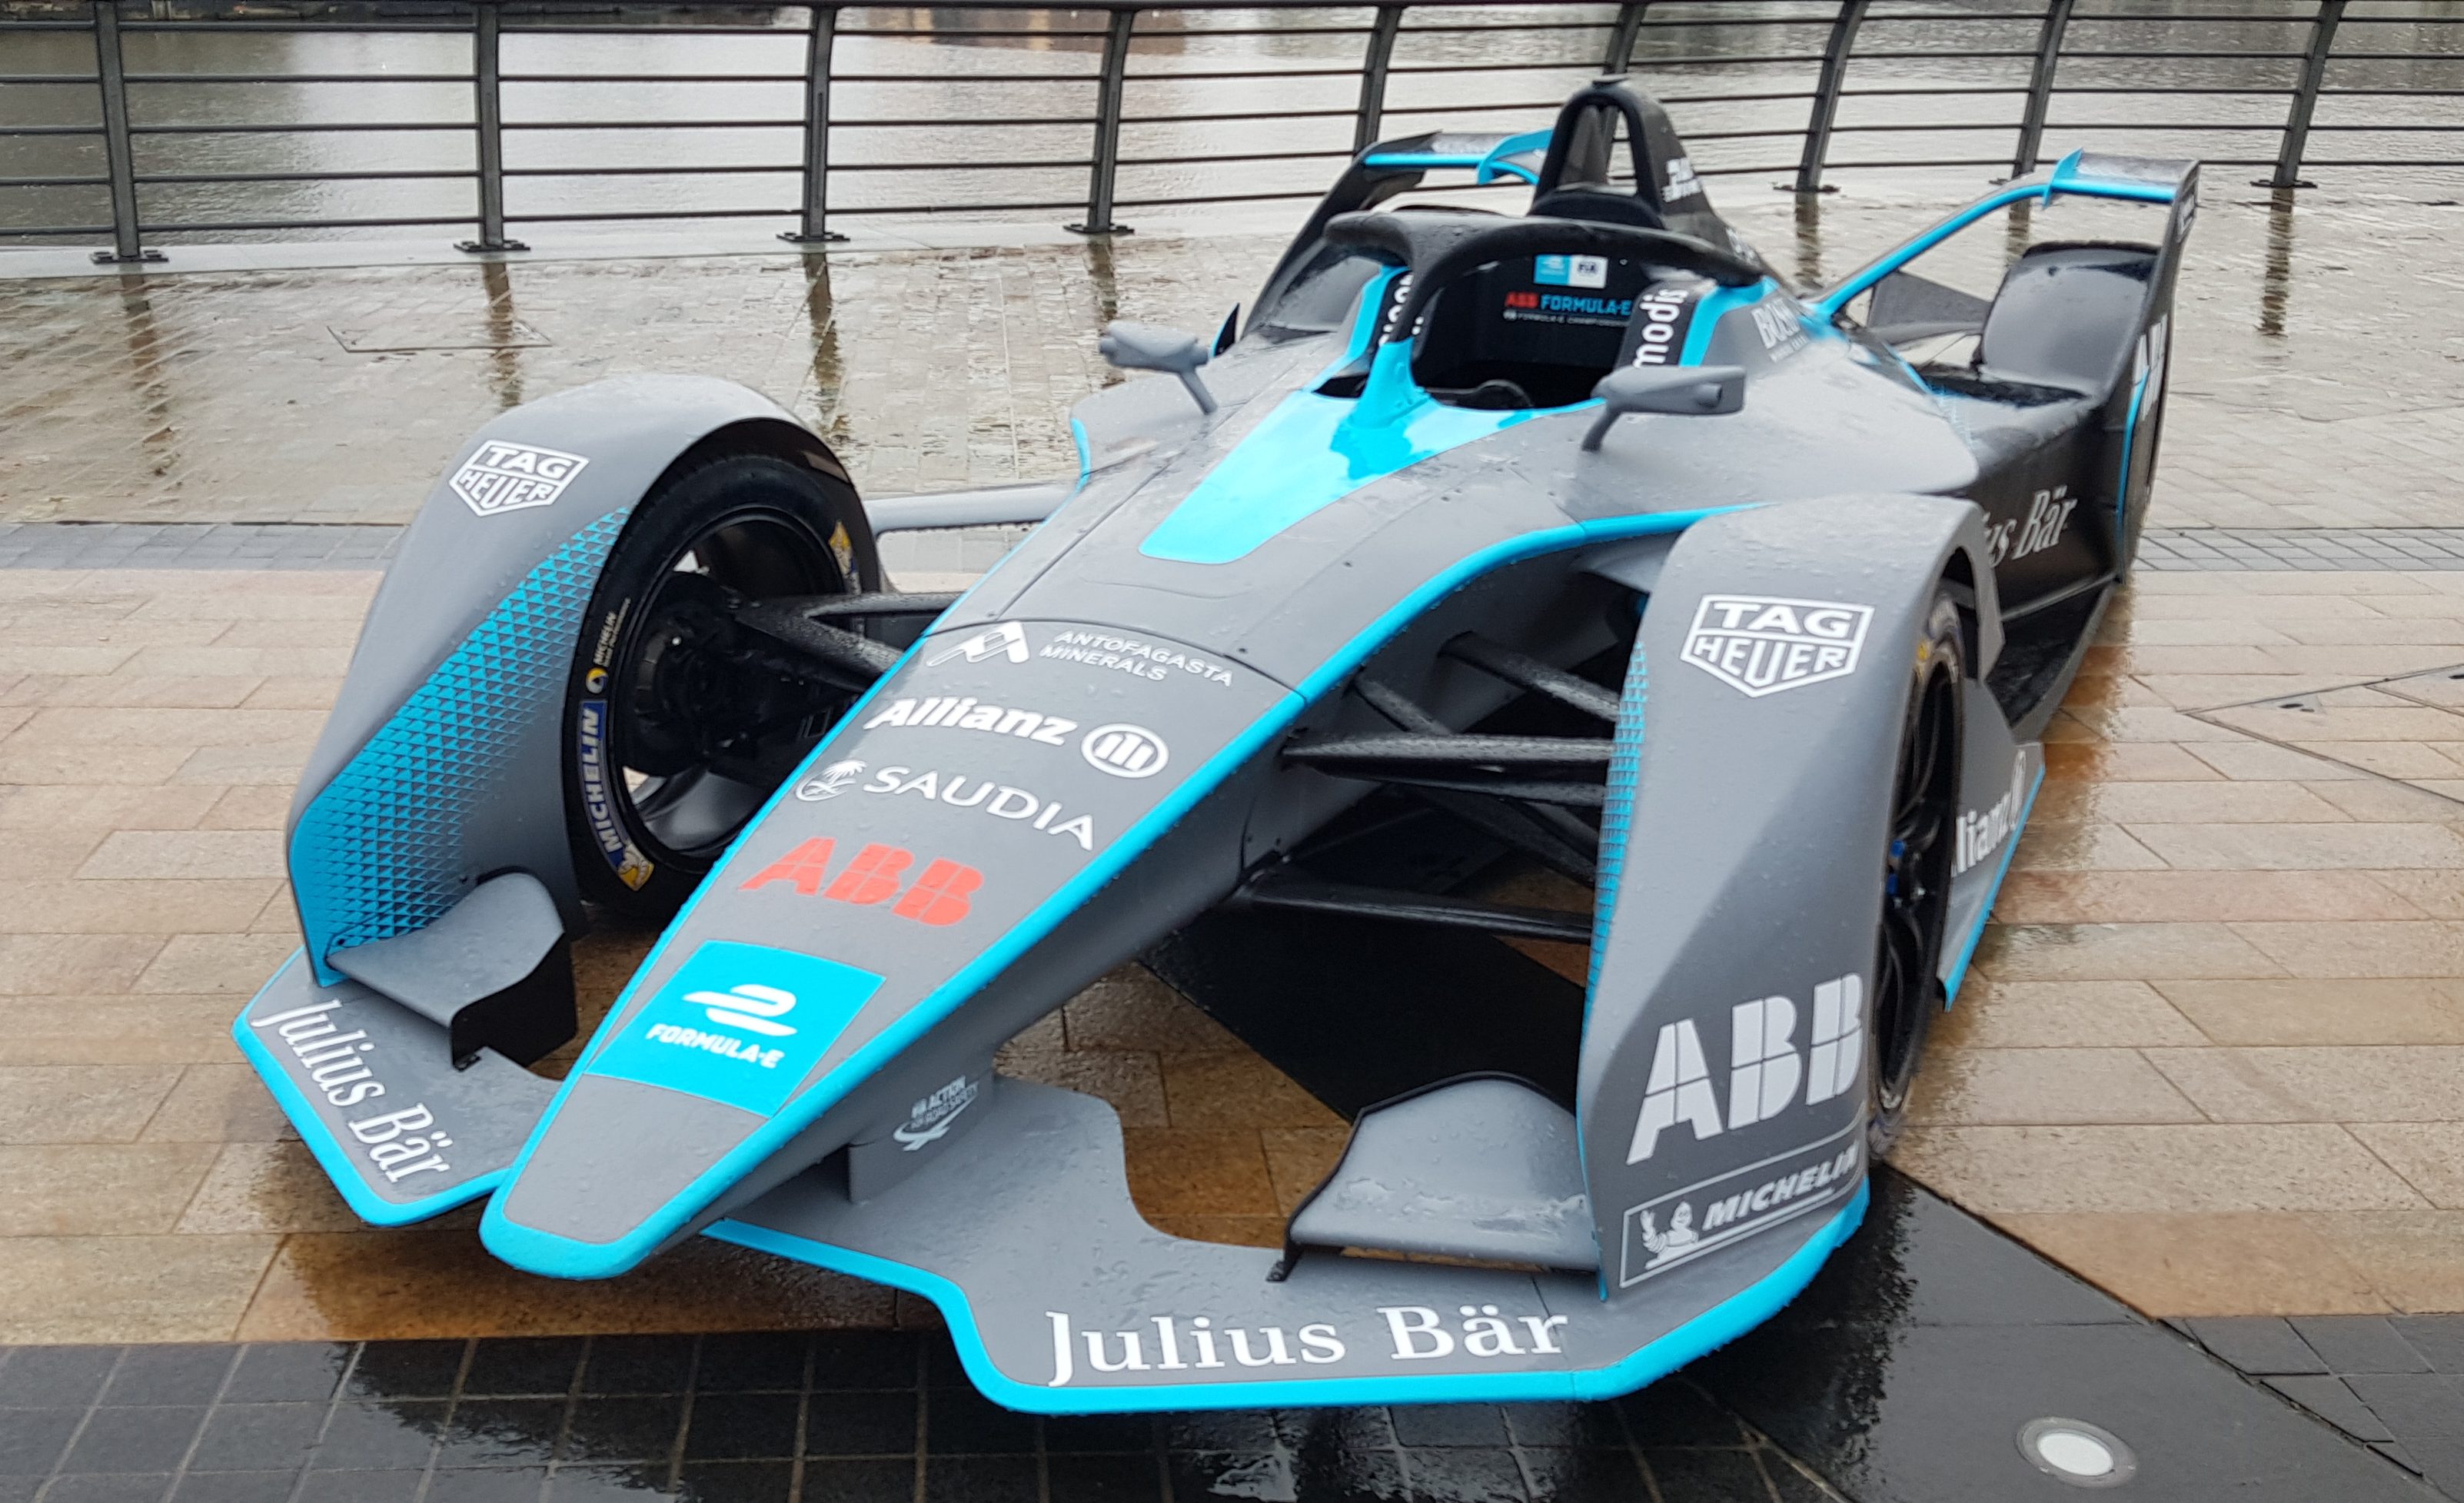 Gen2 Formula E car ahead of the 2018 season